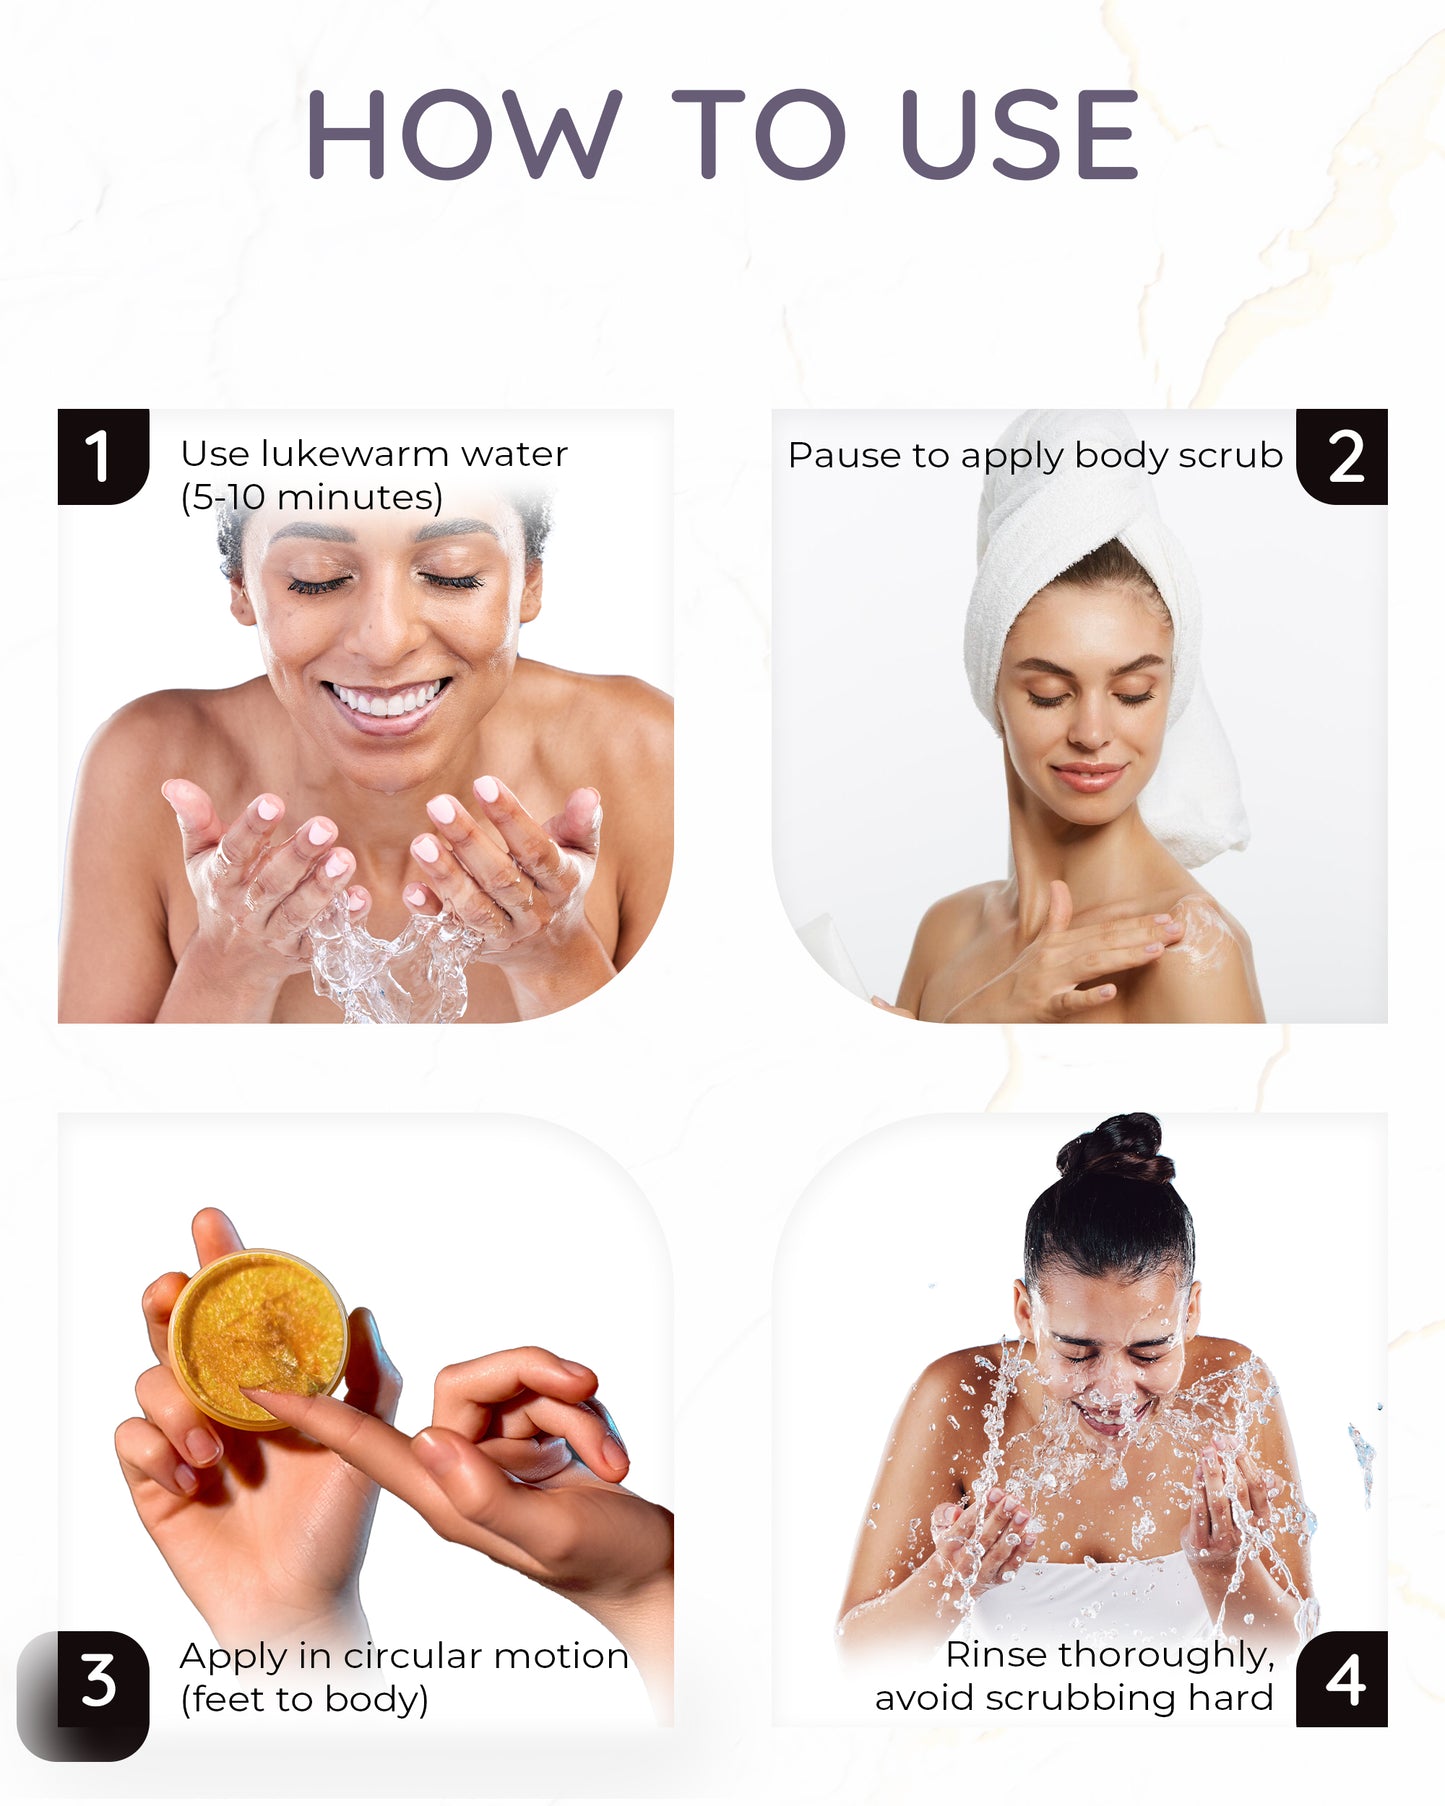 Annoor Foaming Sugar Scrub | Ginger, Honey, Lemon, Turmeric | Exfoliating Formula - 7 oz | Skin Brightening, Dark Spot Removal, and Impurity Cleansing